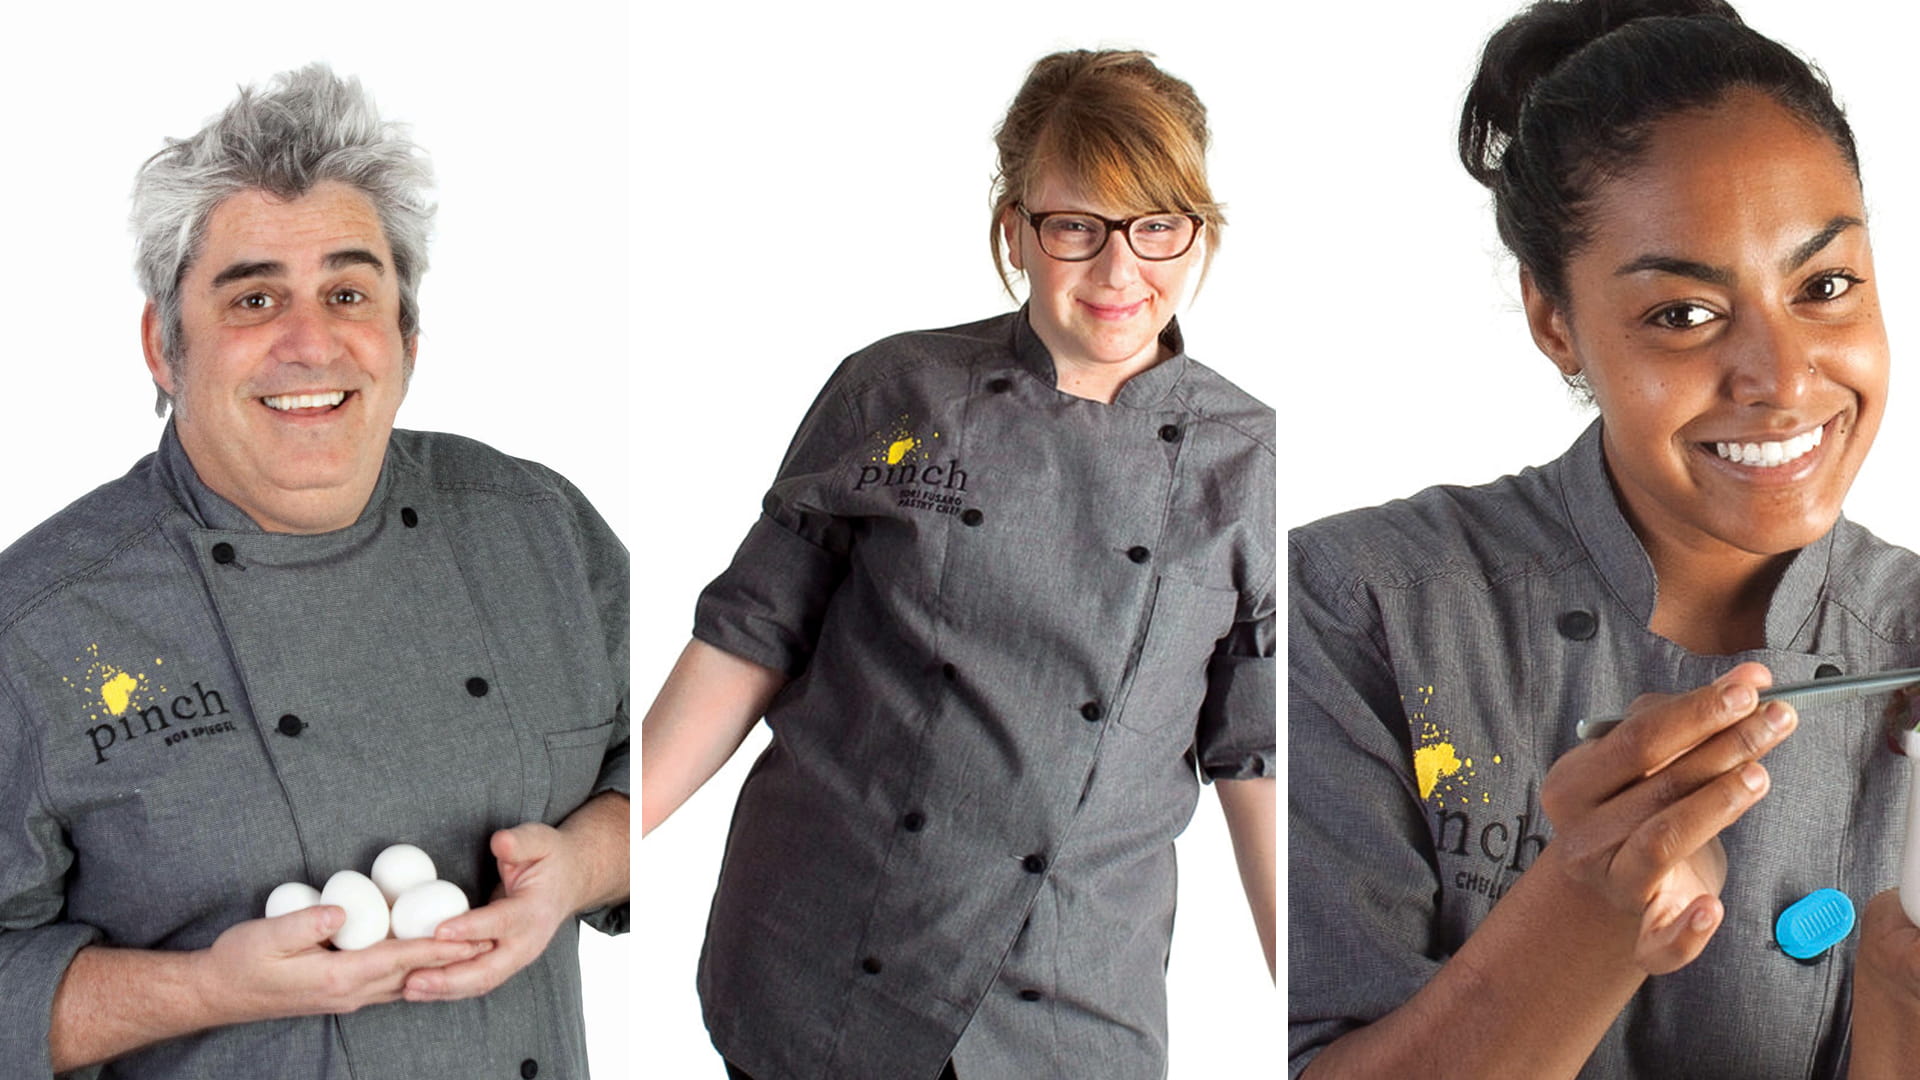 Trio of JWU alumni who work at Pinch Food Design in New York City.